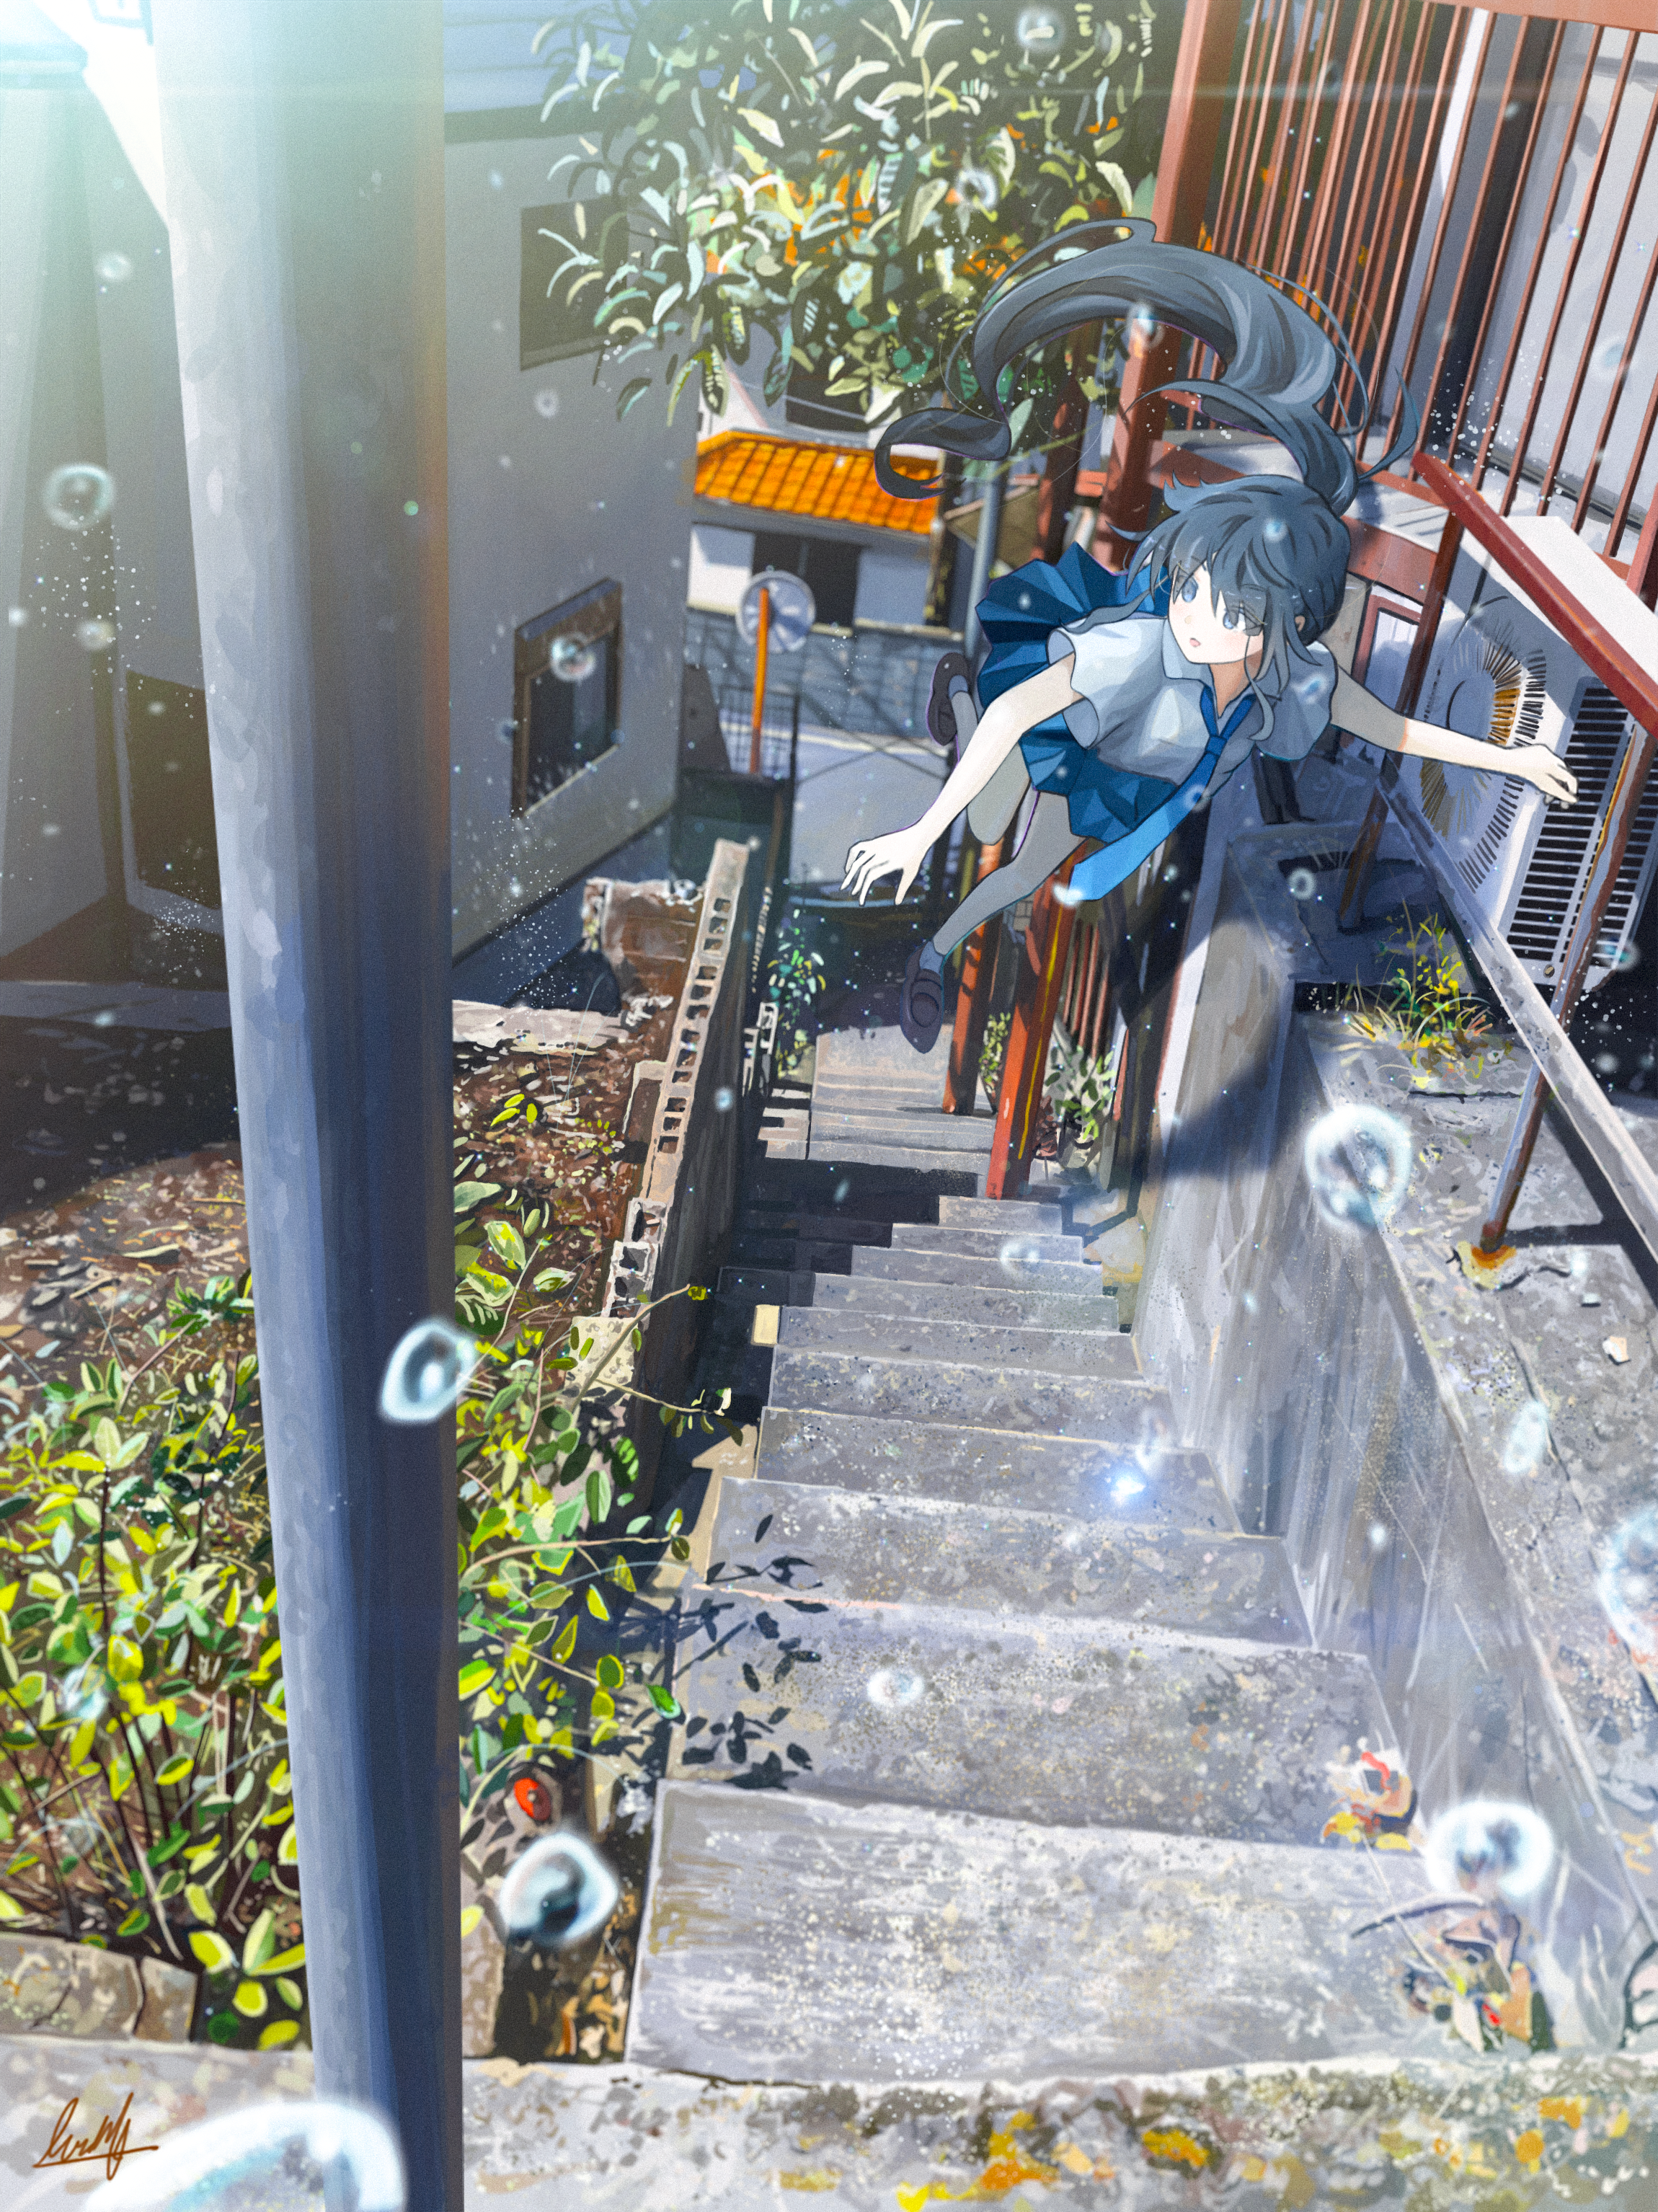 Pixiv Banishment Blue Hair Anime Girls Anime Stairs Tie Schoolgirl School Uniform Floating Portrait  2300x3068